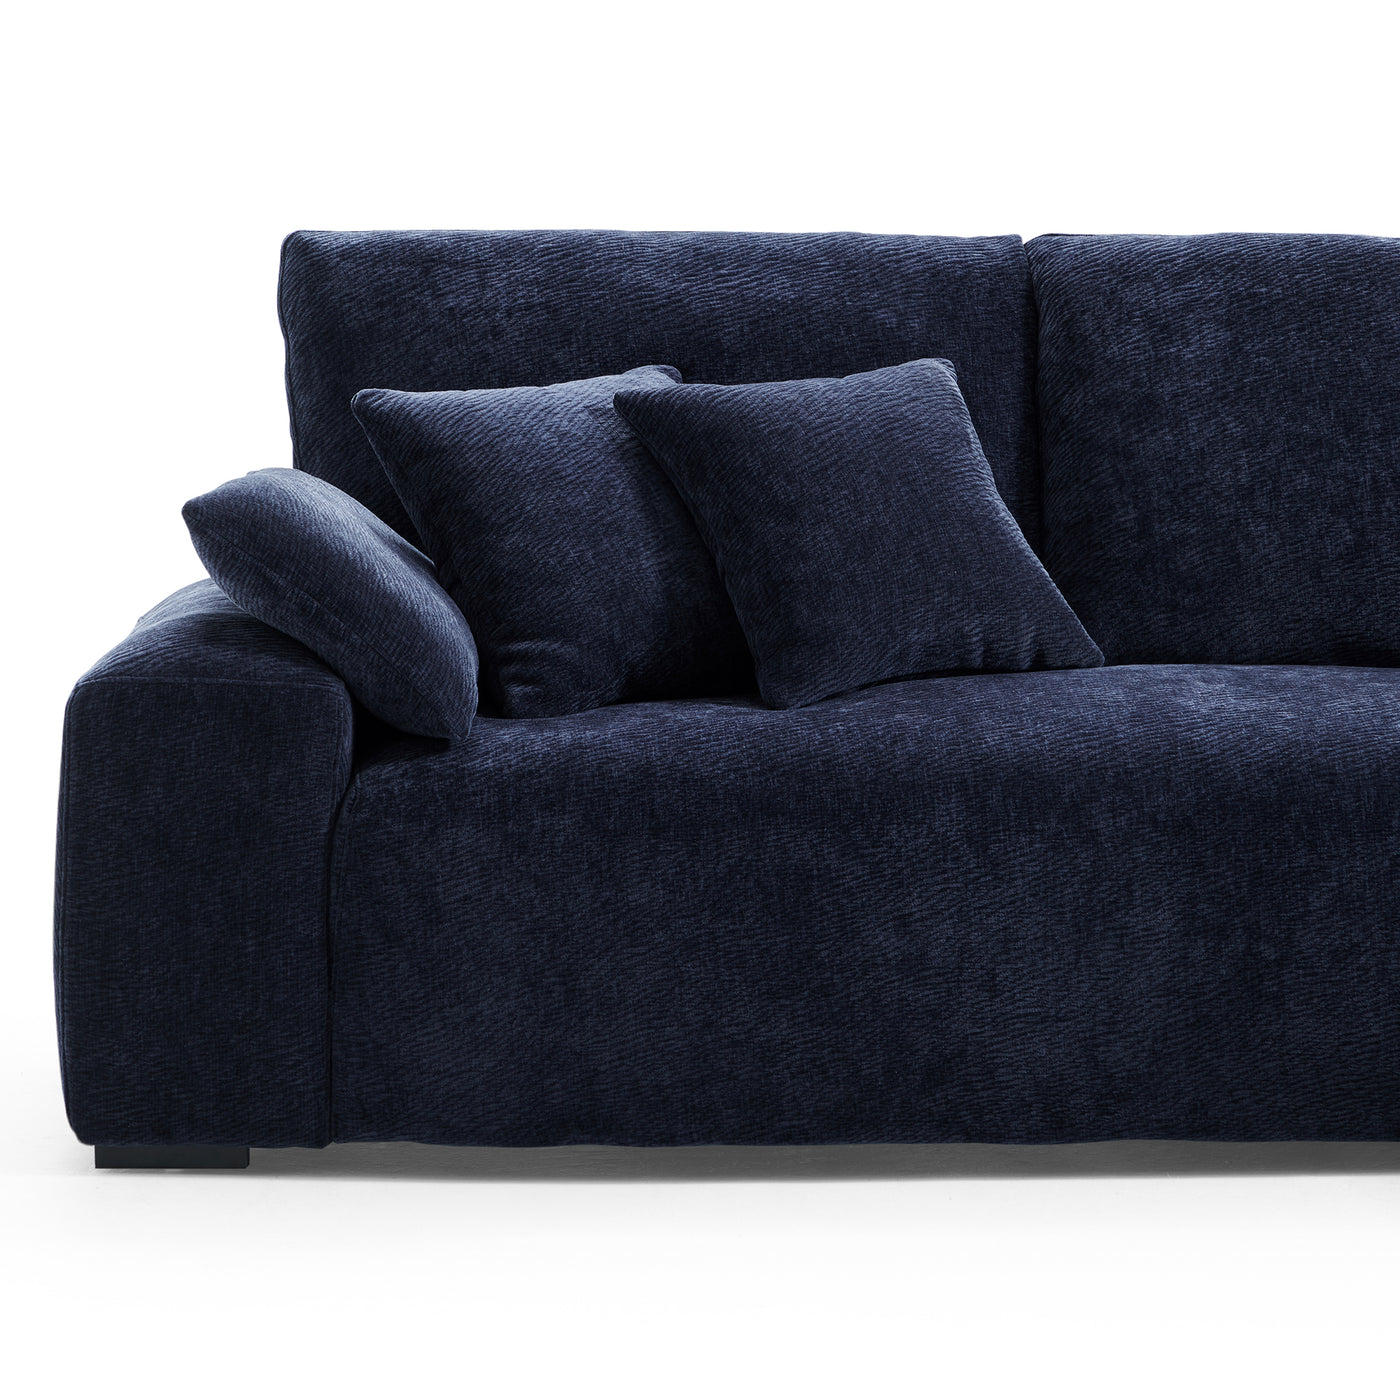 The Empress Navy Blue Sofa and Ottoman-Navy Blue